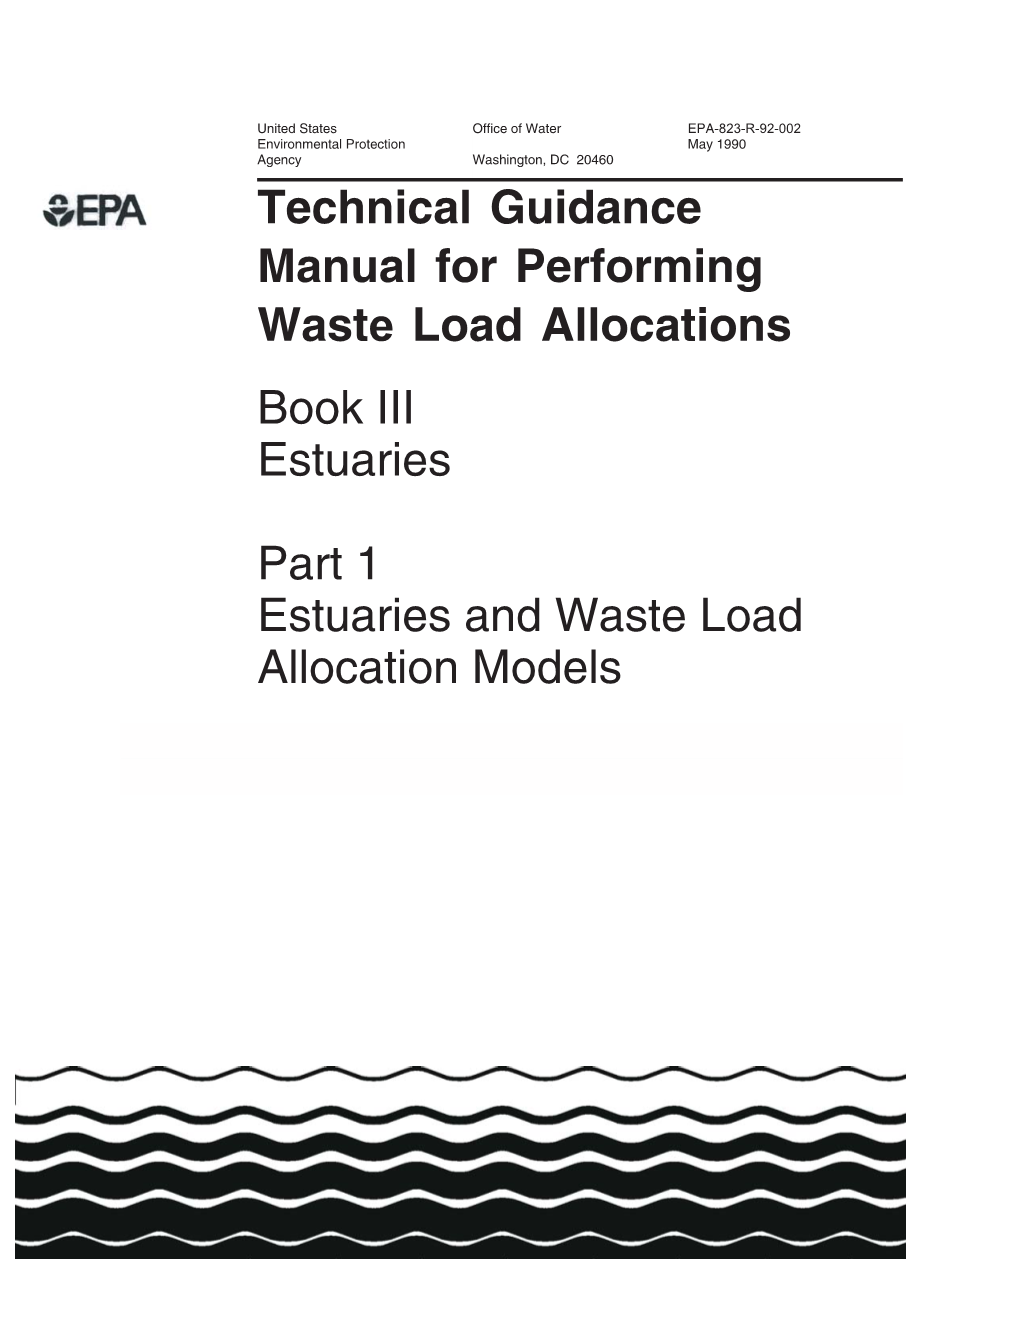 PART 1: Estuaries and Waste Load Allocation Models